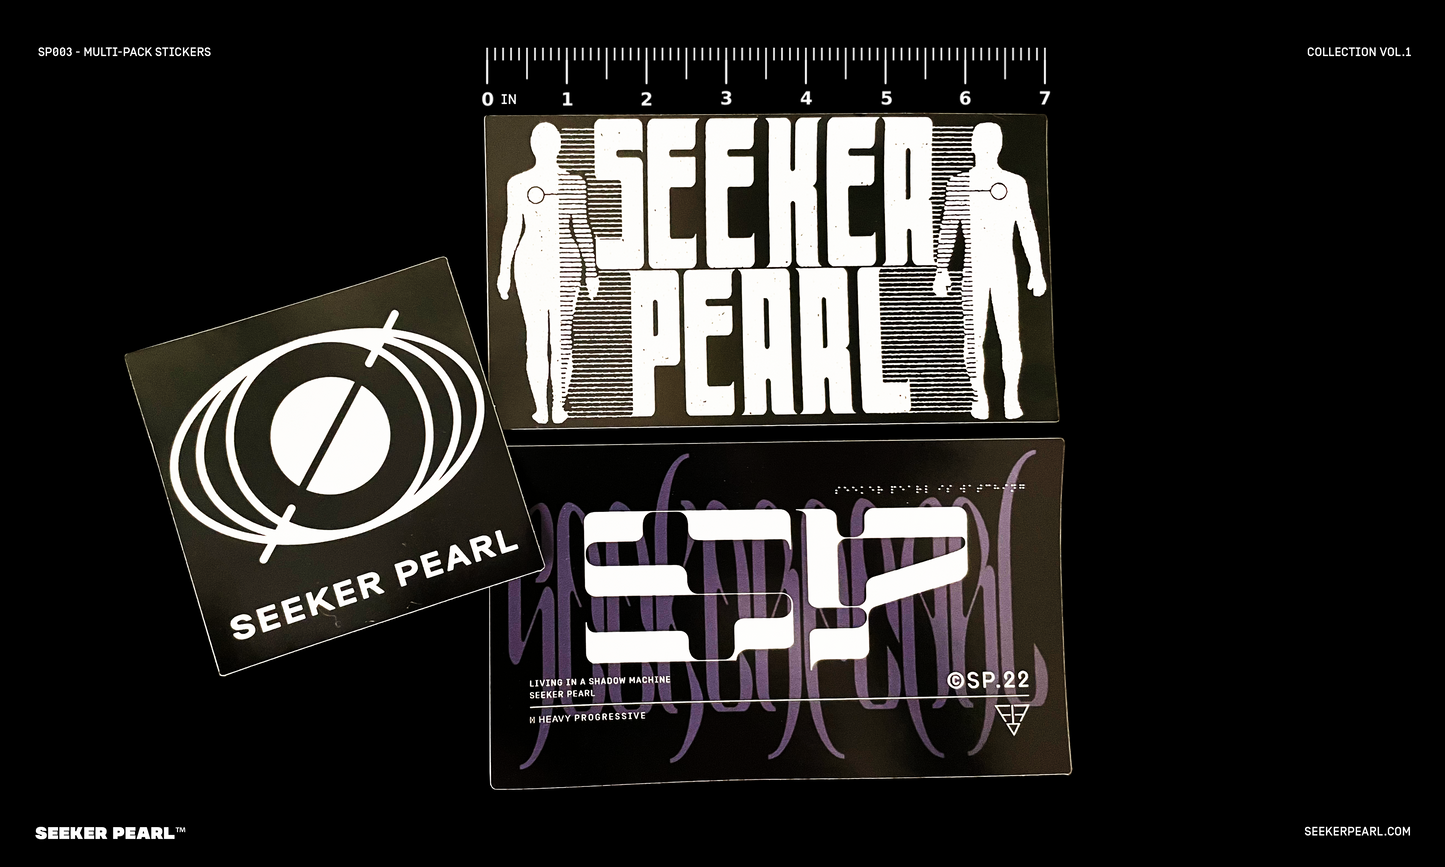 SP013 - Sticker Pack